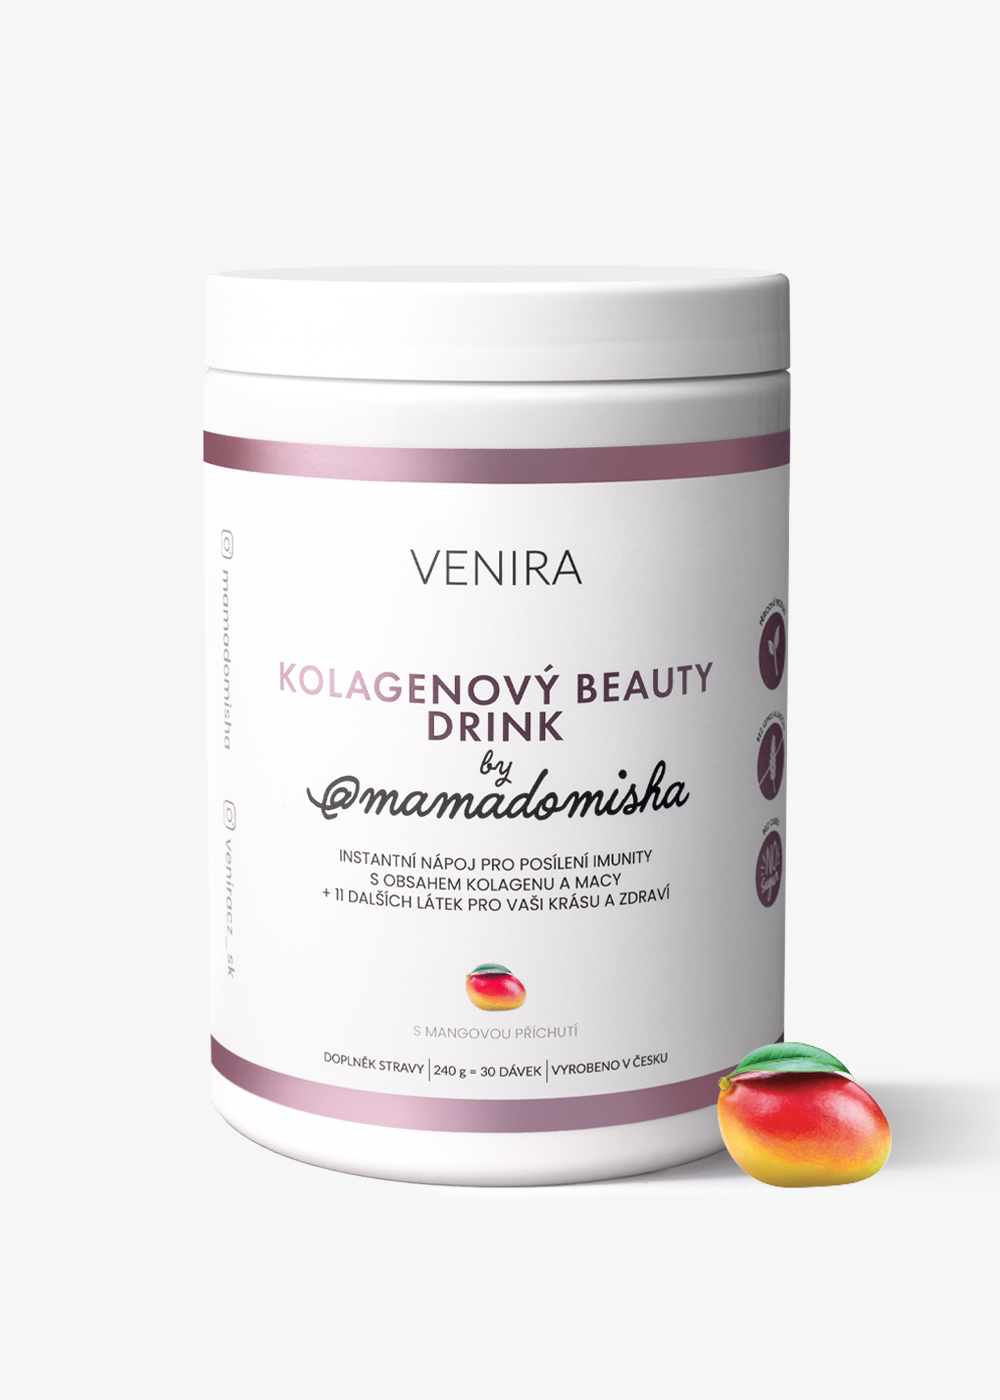 VENIRA kolagénový beauty drink by @mamadomisha, mango, 240 g